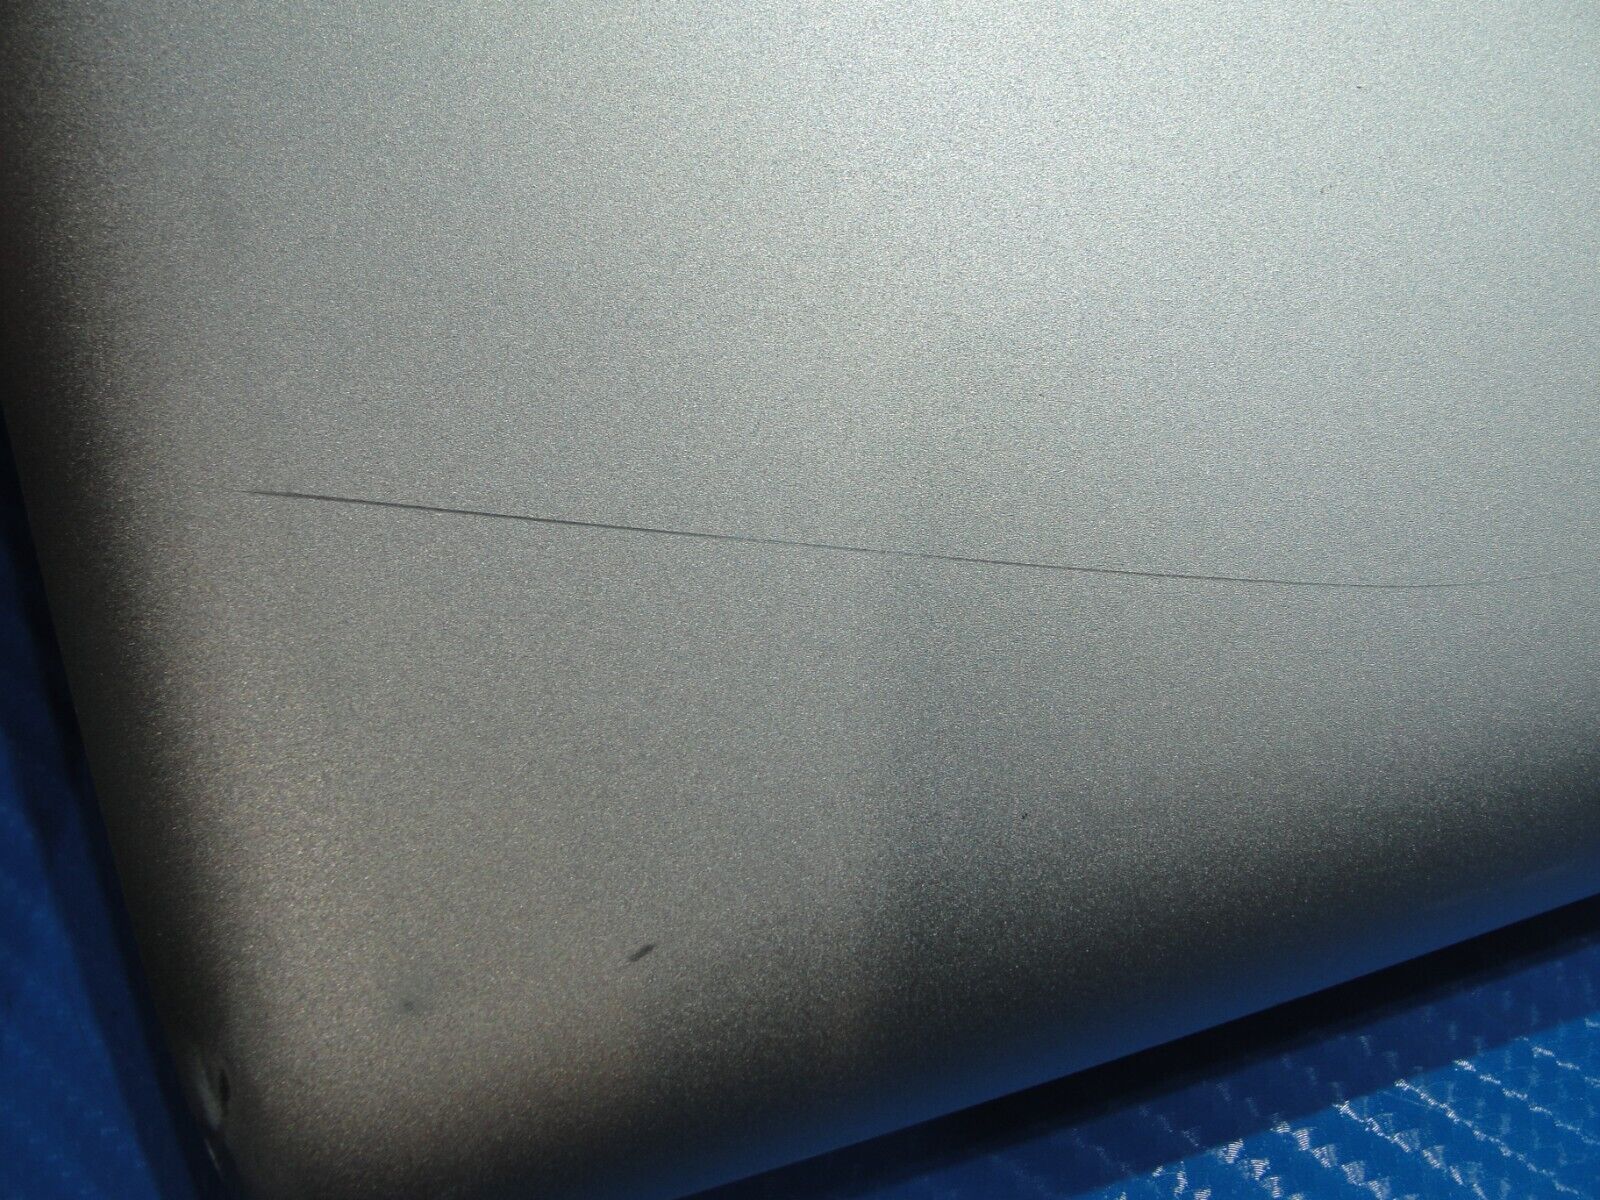 MacBook Pro A1278 MC724LL/A Early 2011 13